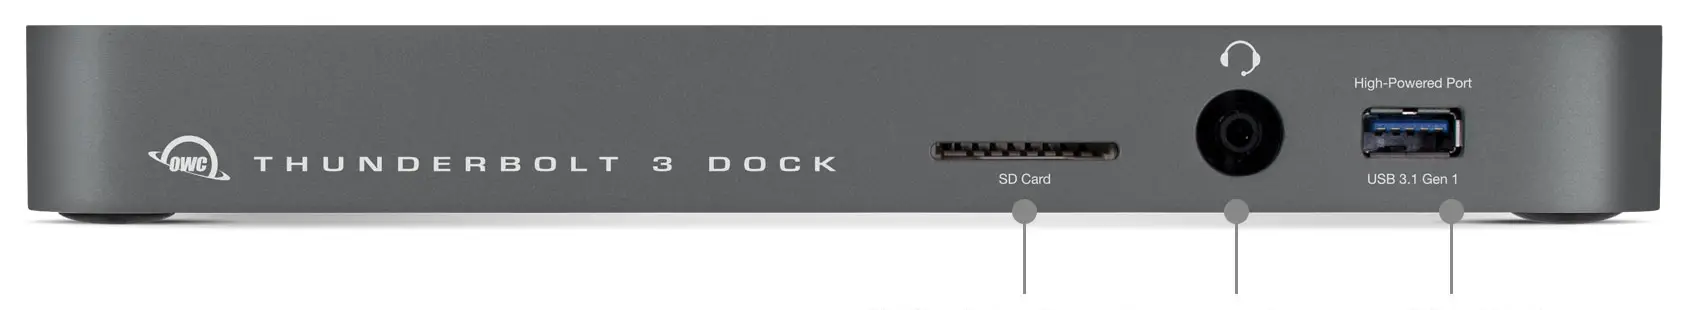 OWC Thunderbolt 3 Dock